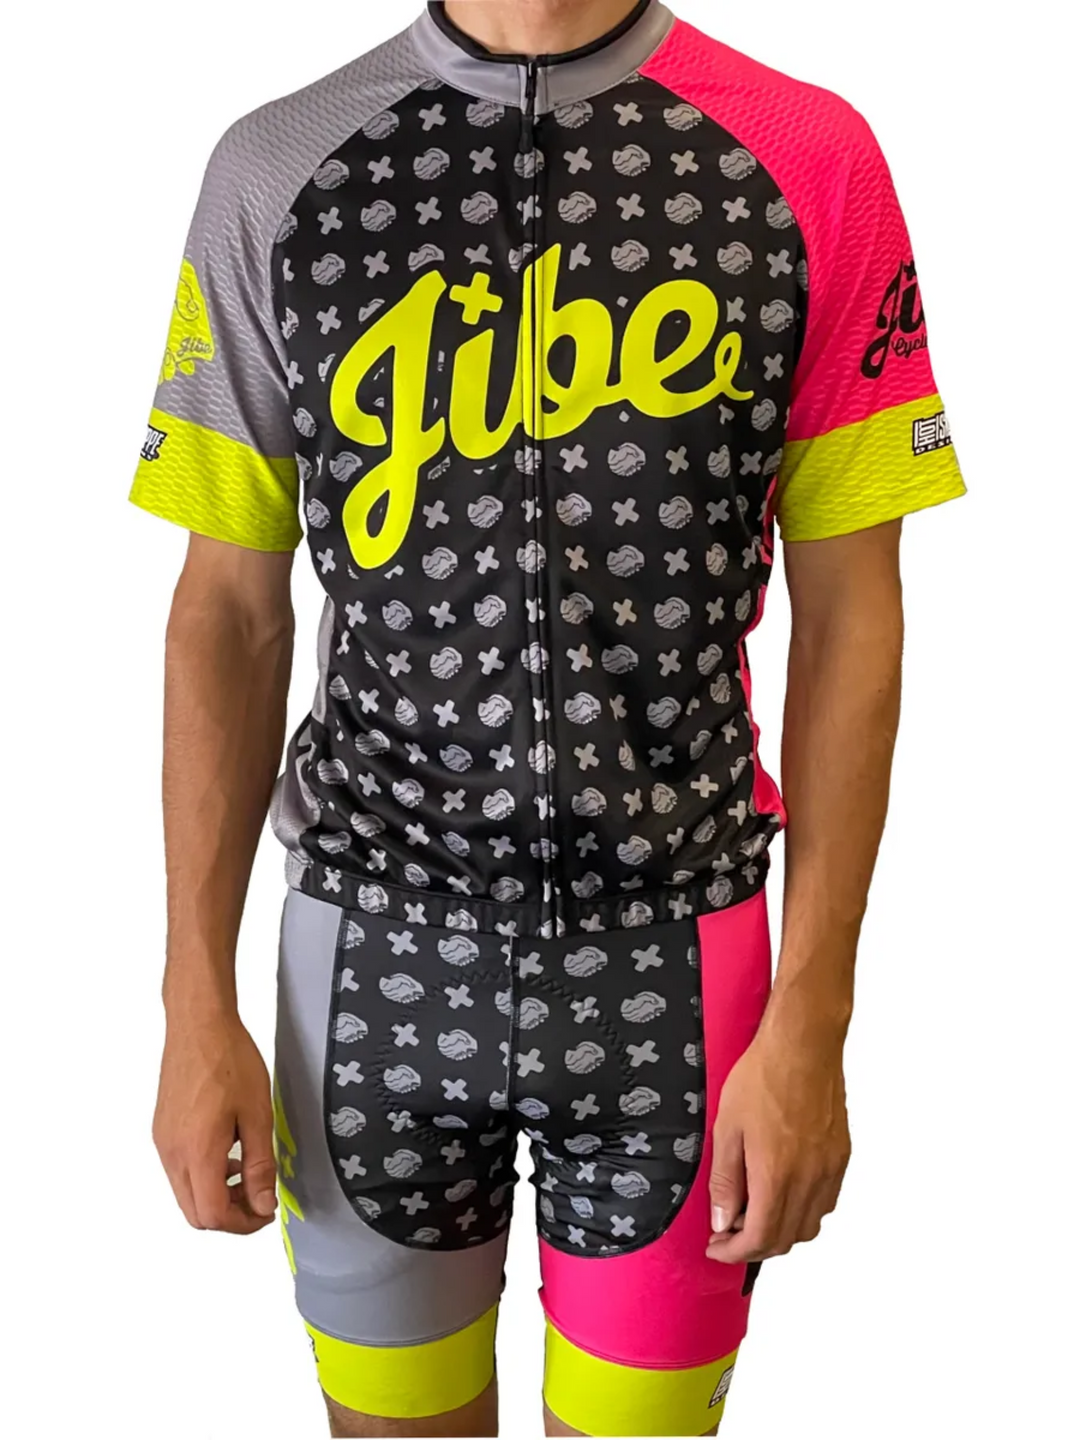 Jibe XC Bib Short (Bibs Only)